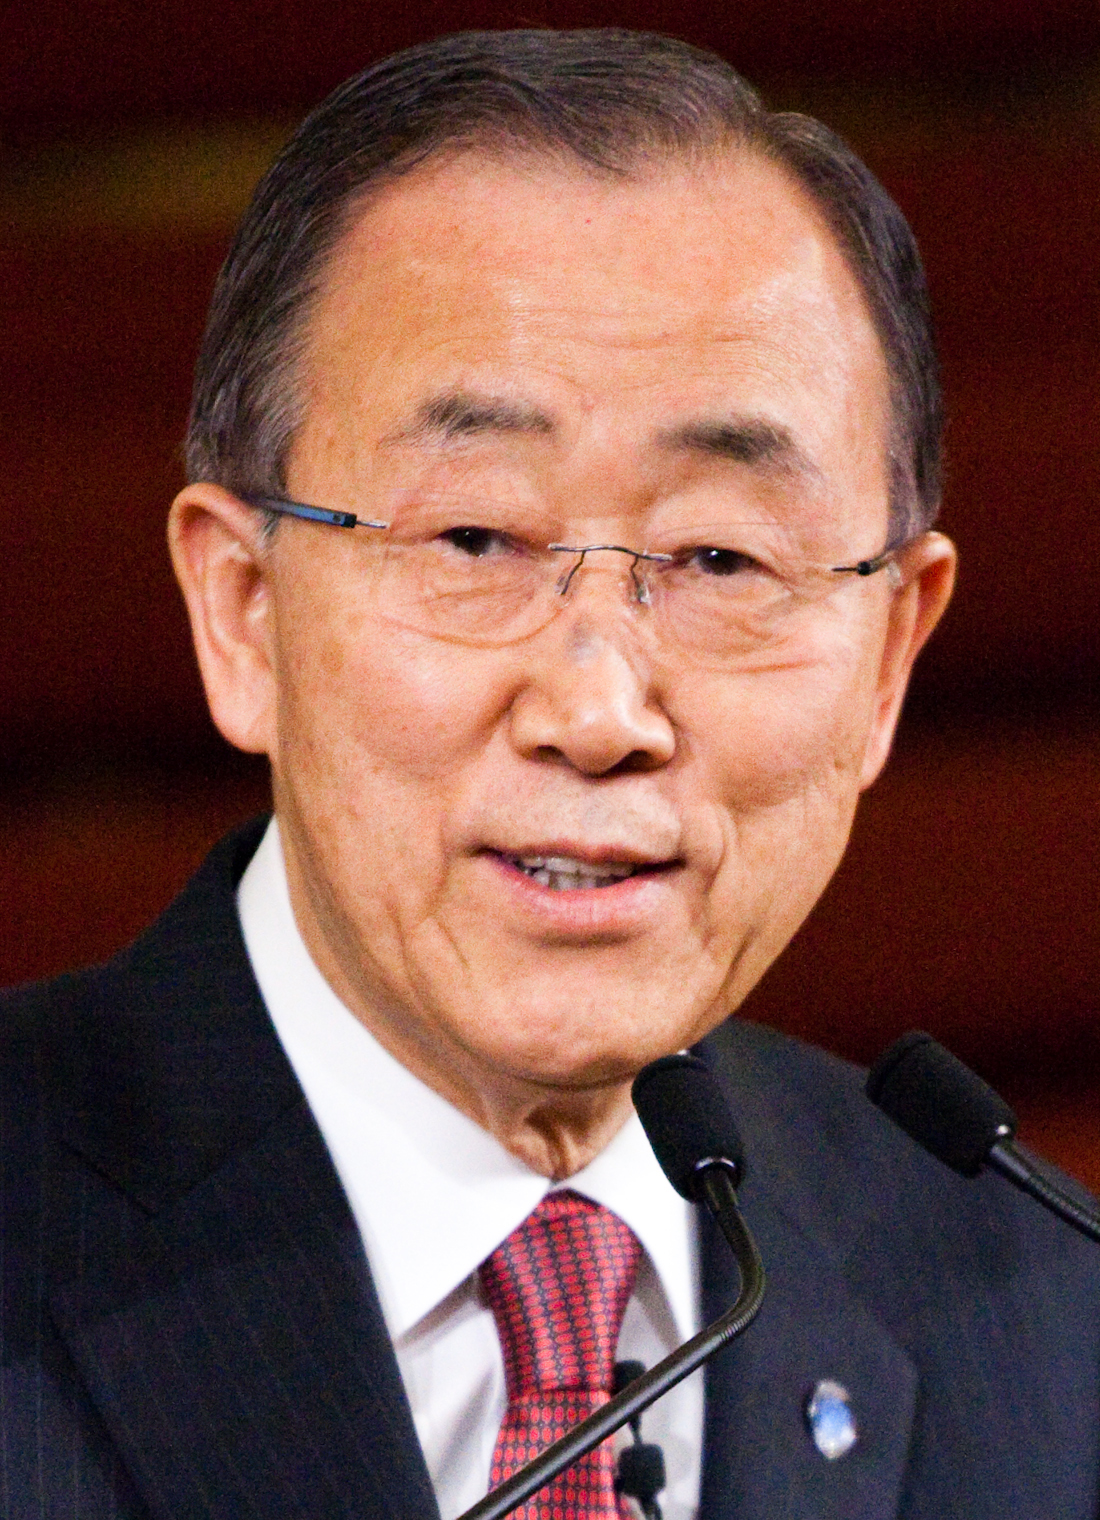 Ehemaliger UN-Generalsekretär Ban Ki-moon